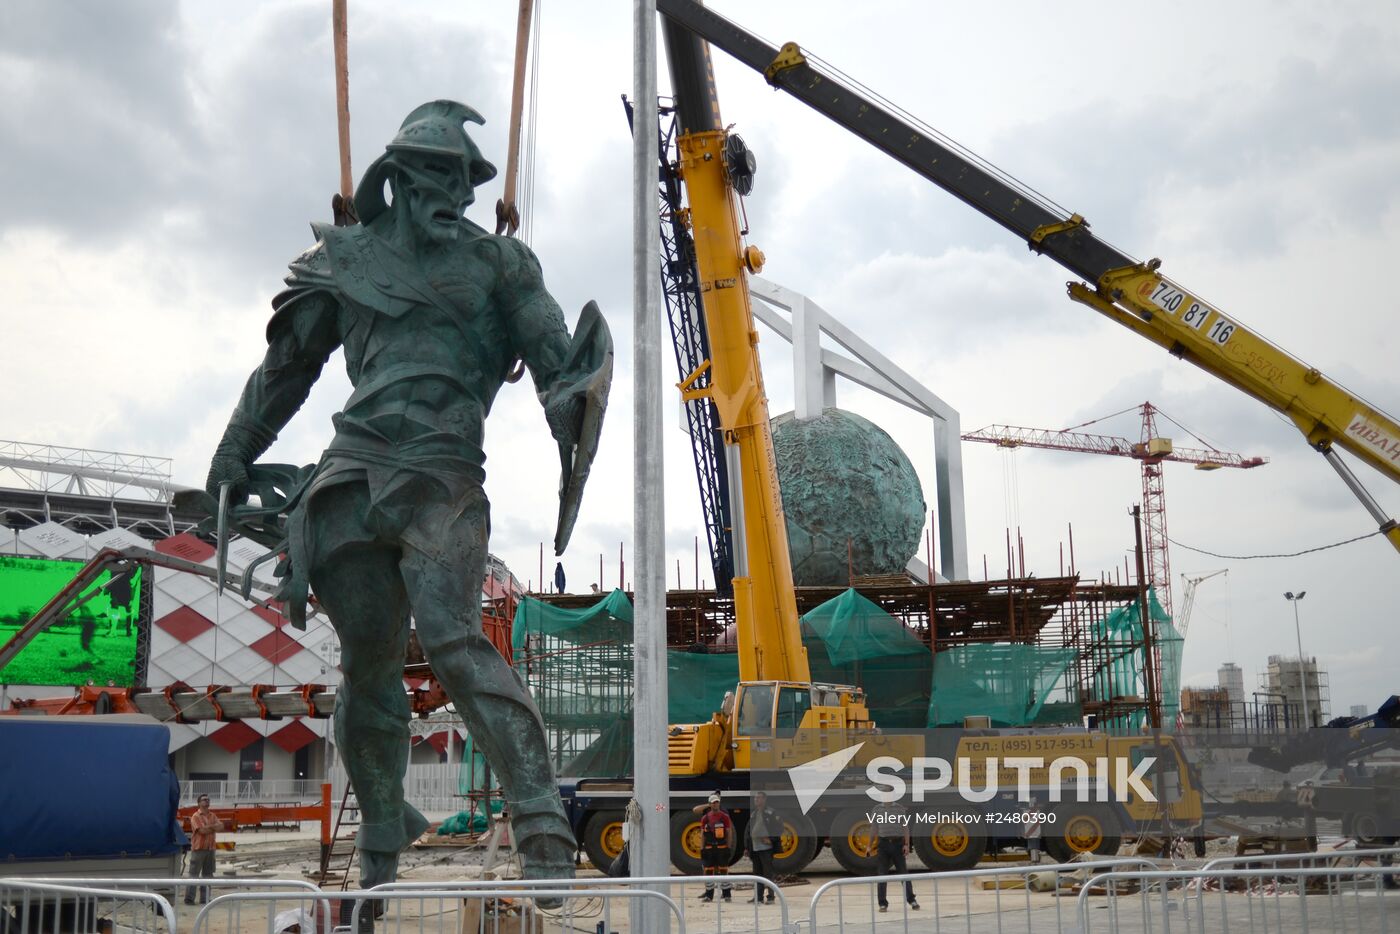 Installing Gladiator sculpture in the northern stands of Spartak stadium